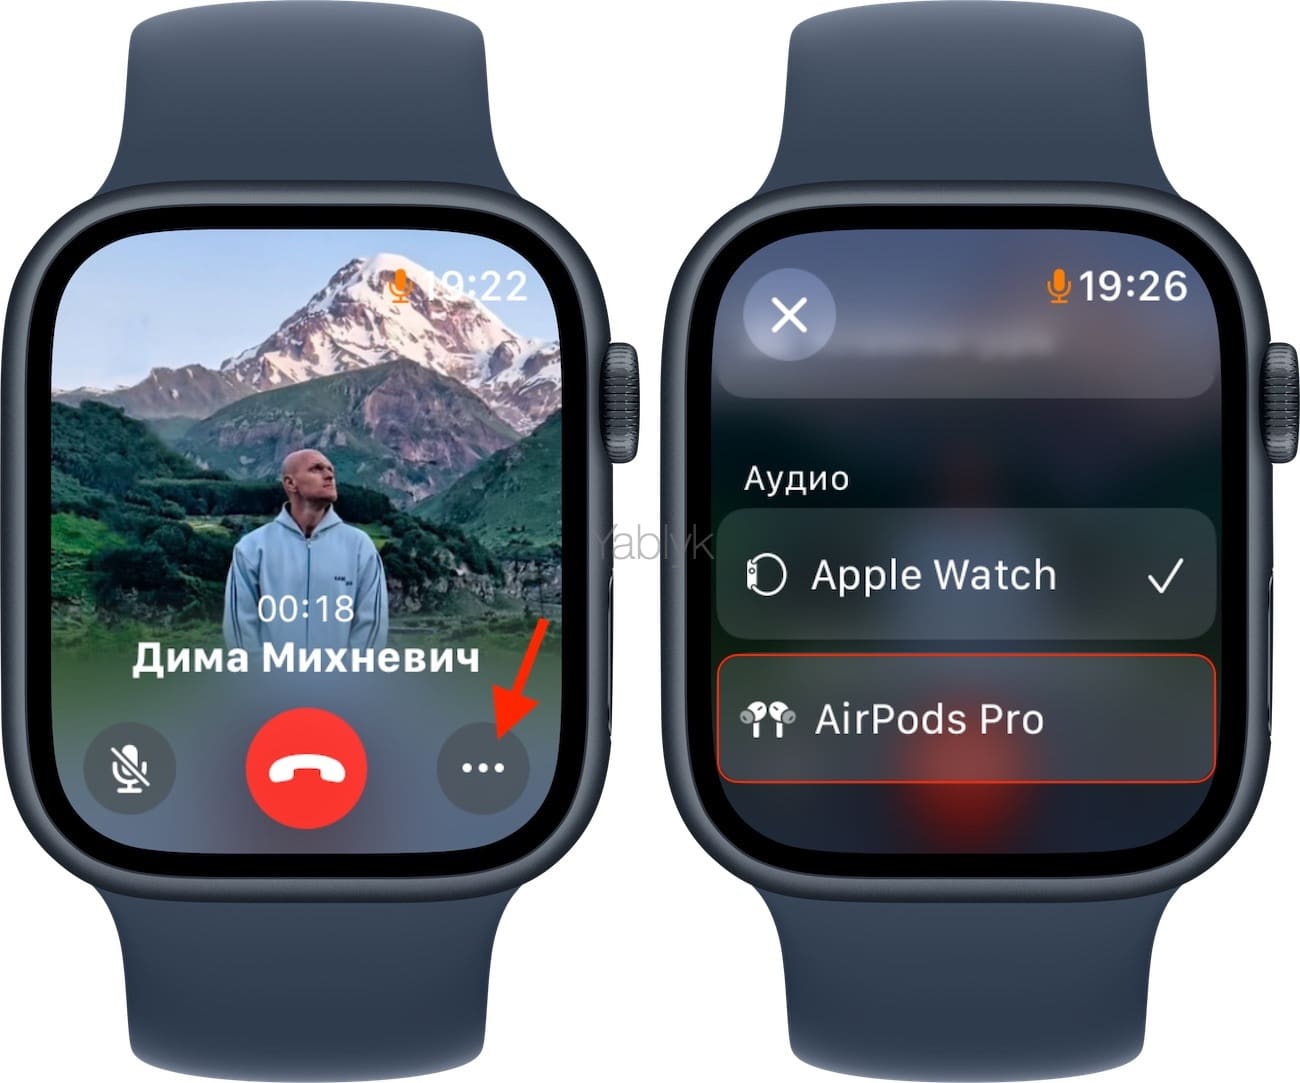 Как перевести звонок с Apple Watch на наушники?